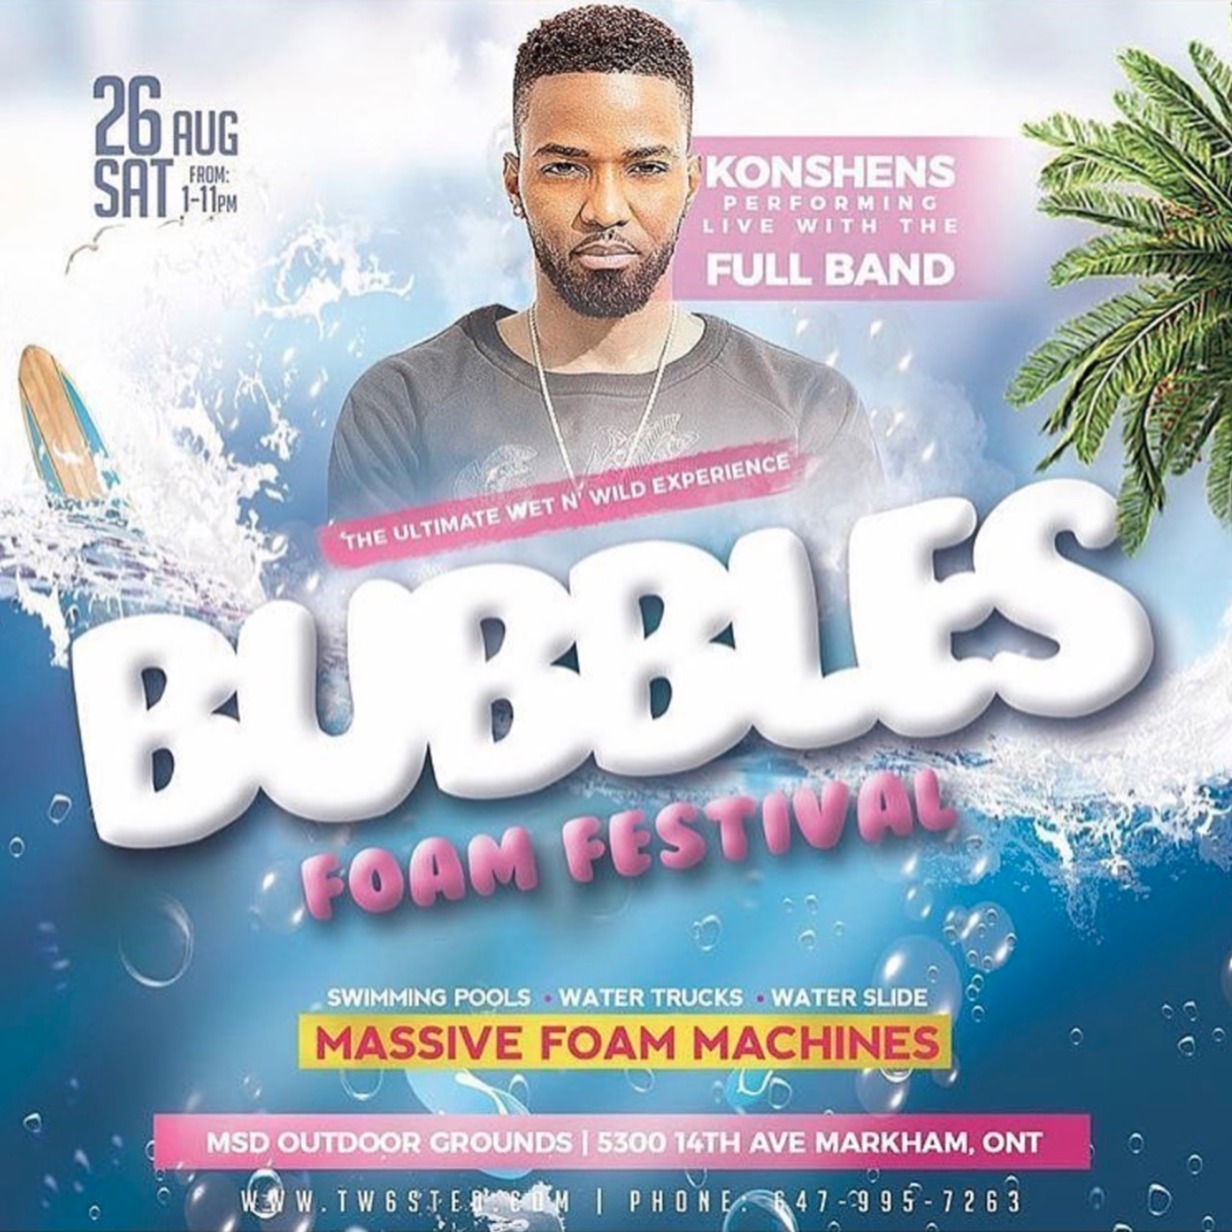 Bubbles Foam Festival Ft. Konshens LIVE | The Wet N Wild Experience